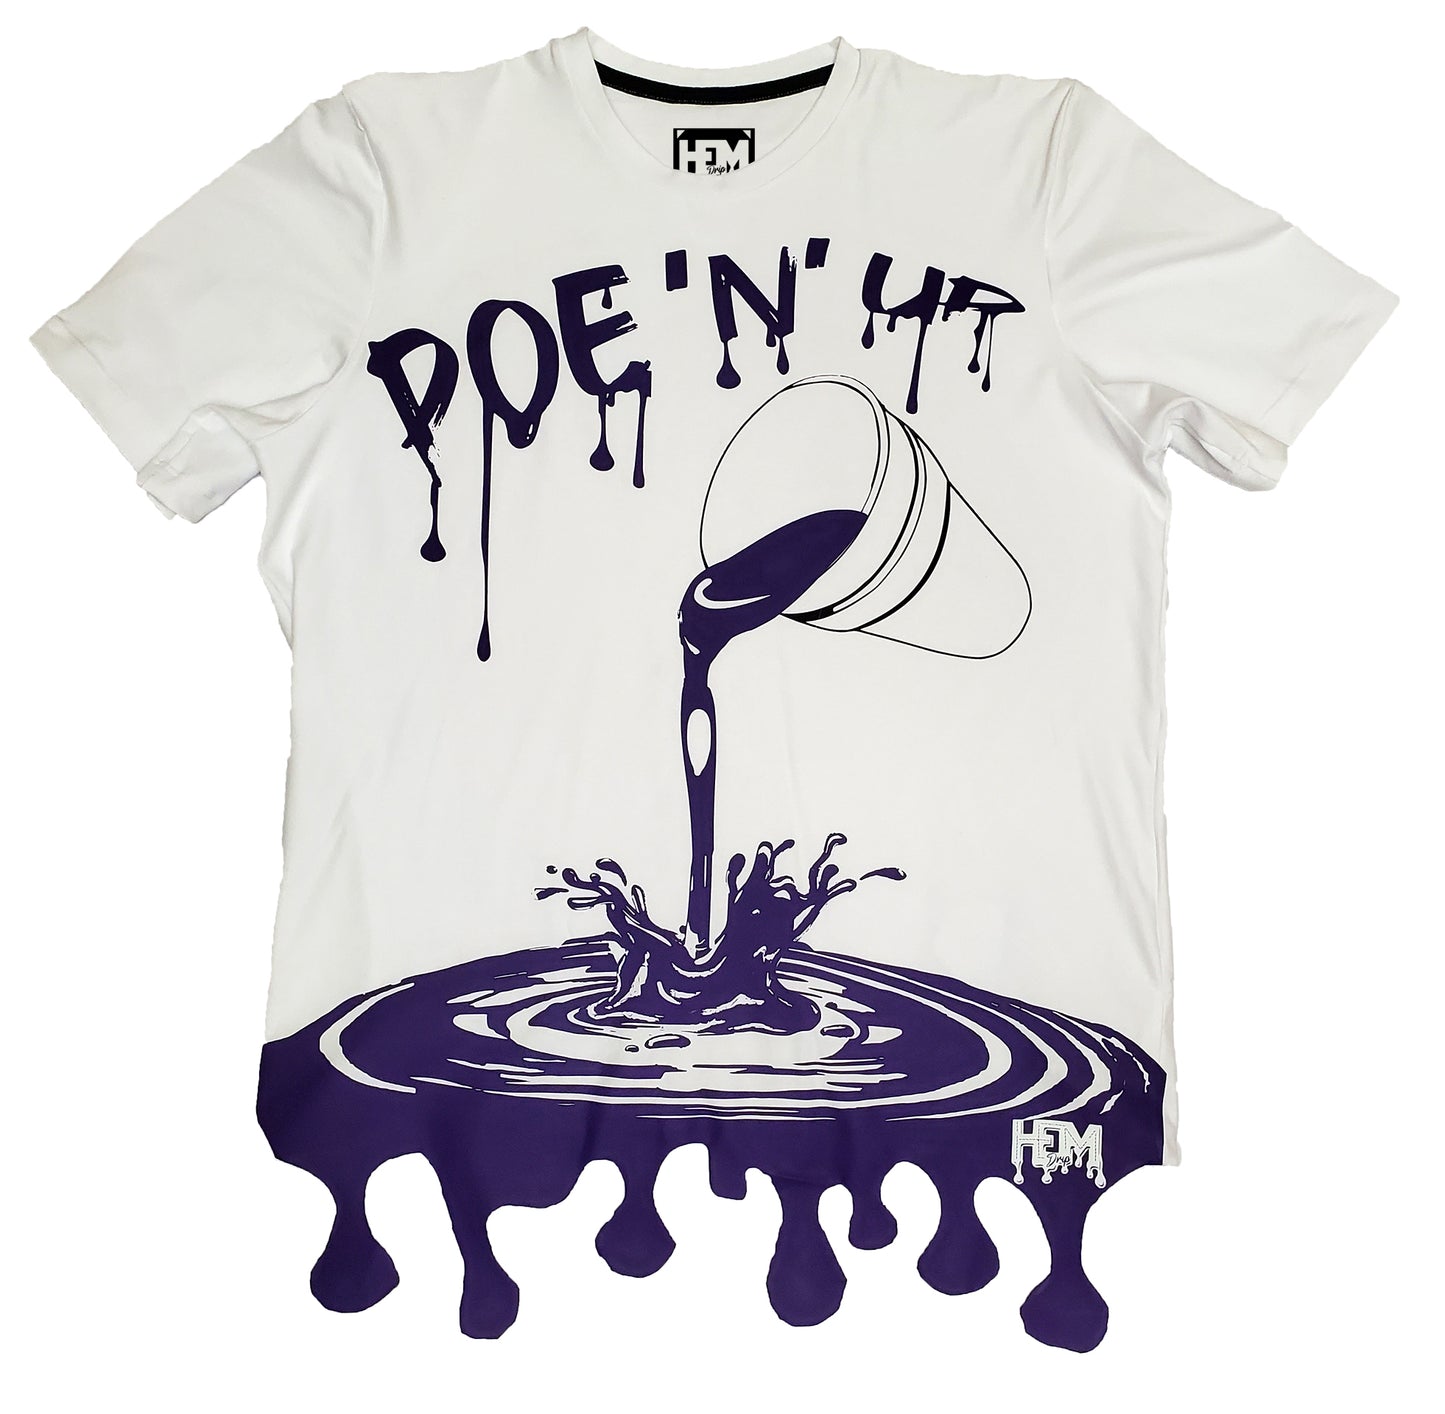 Poe N Up Hem Drip Trademark "Drip" Shirt Cut